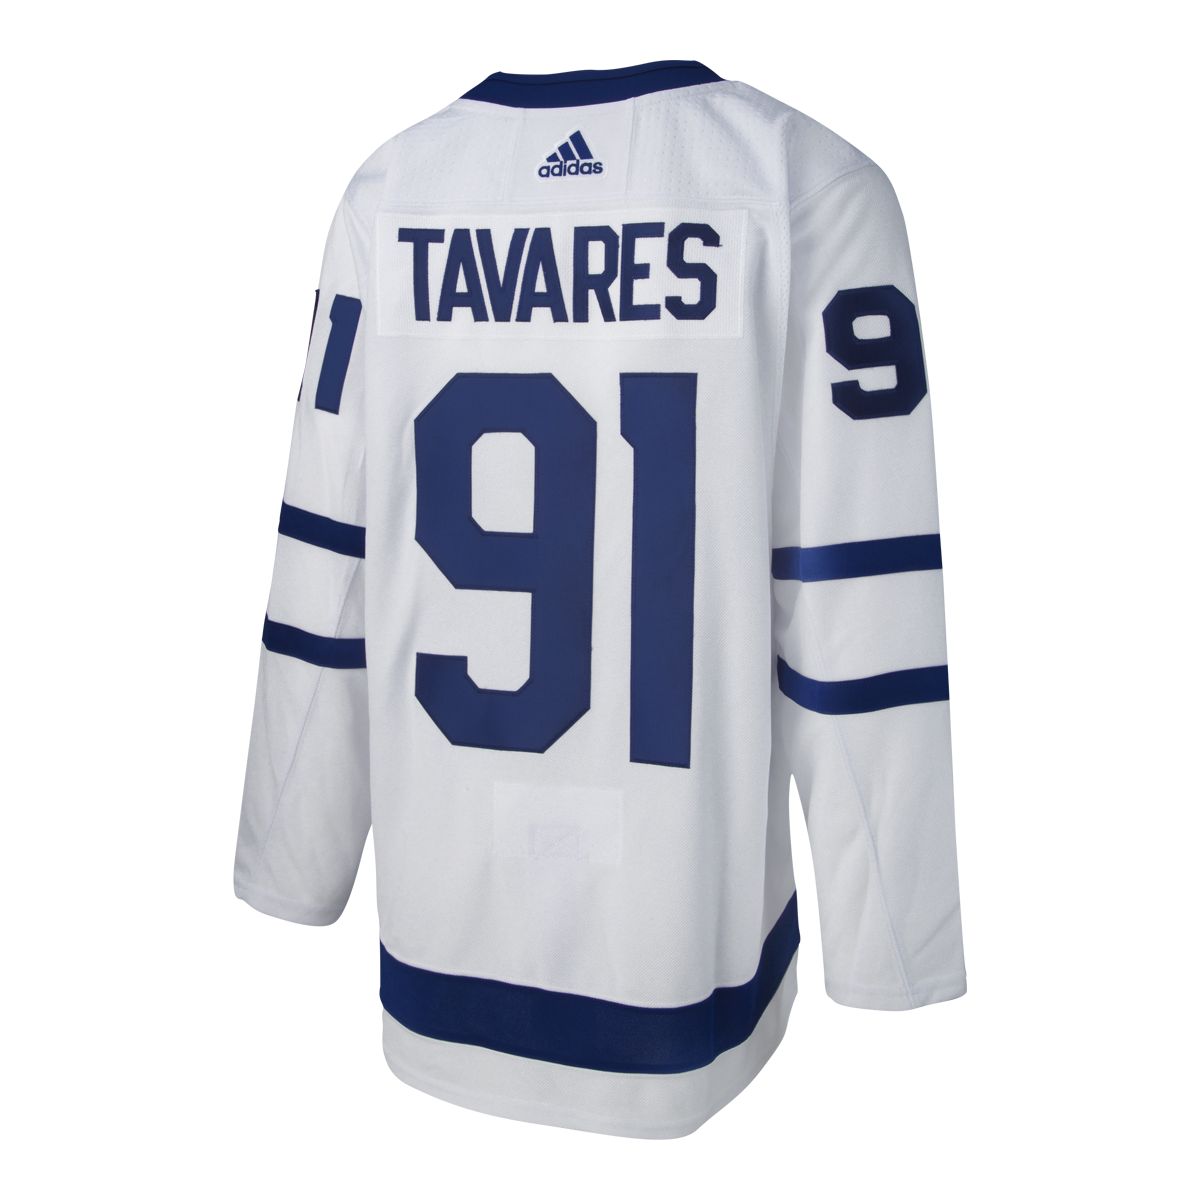 Toronto Maple Leafs adidas John Tavares Jersey, Hockey, NHL